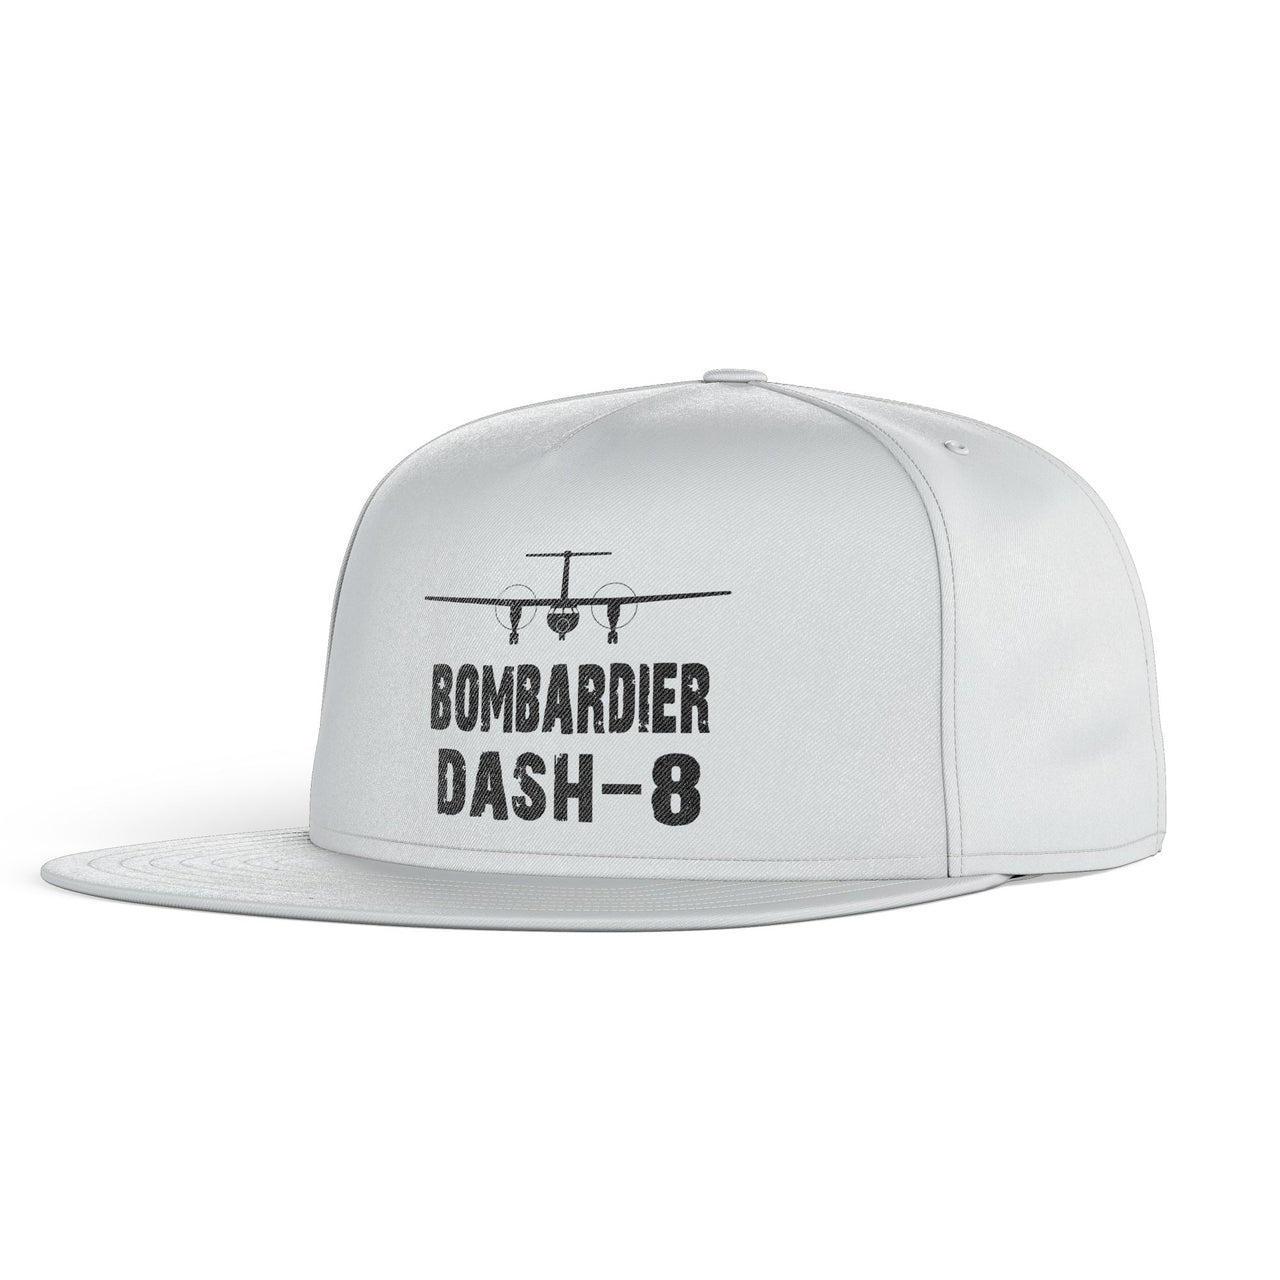 Bombardier Dash-8 & Plane Designed Snapback Caps & Hats